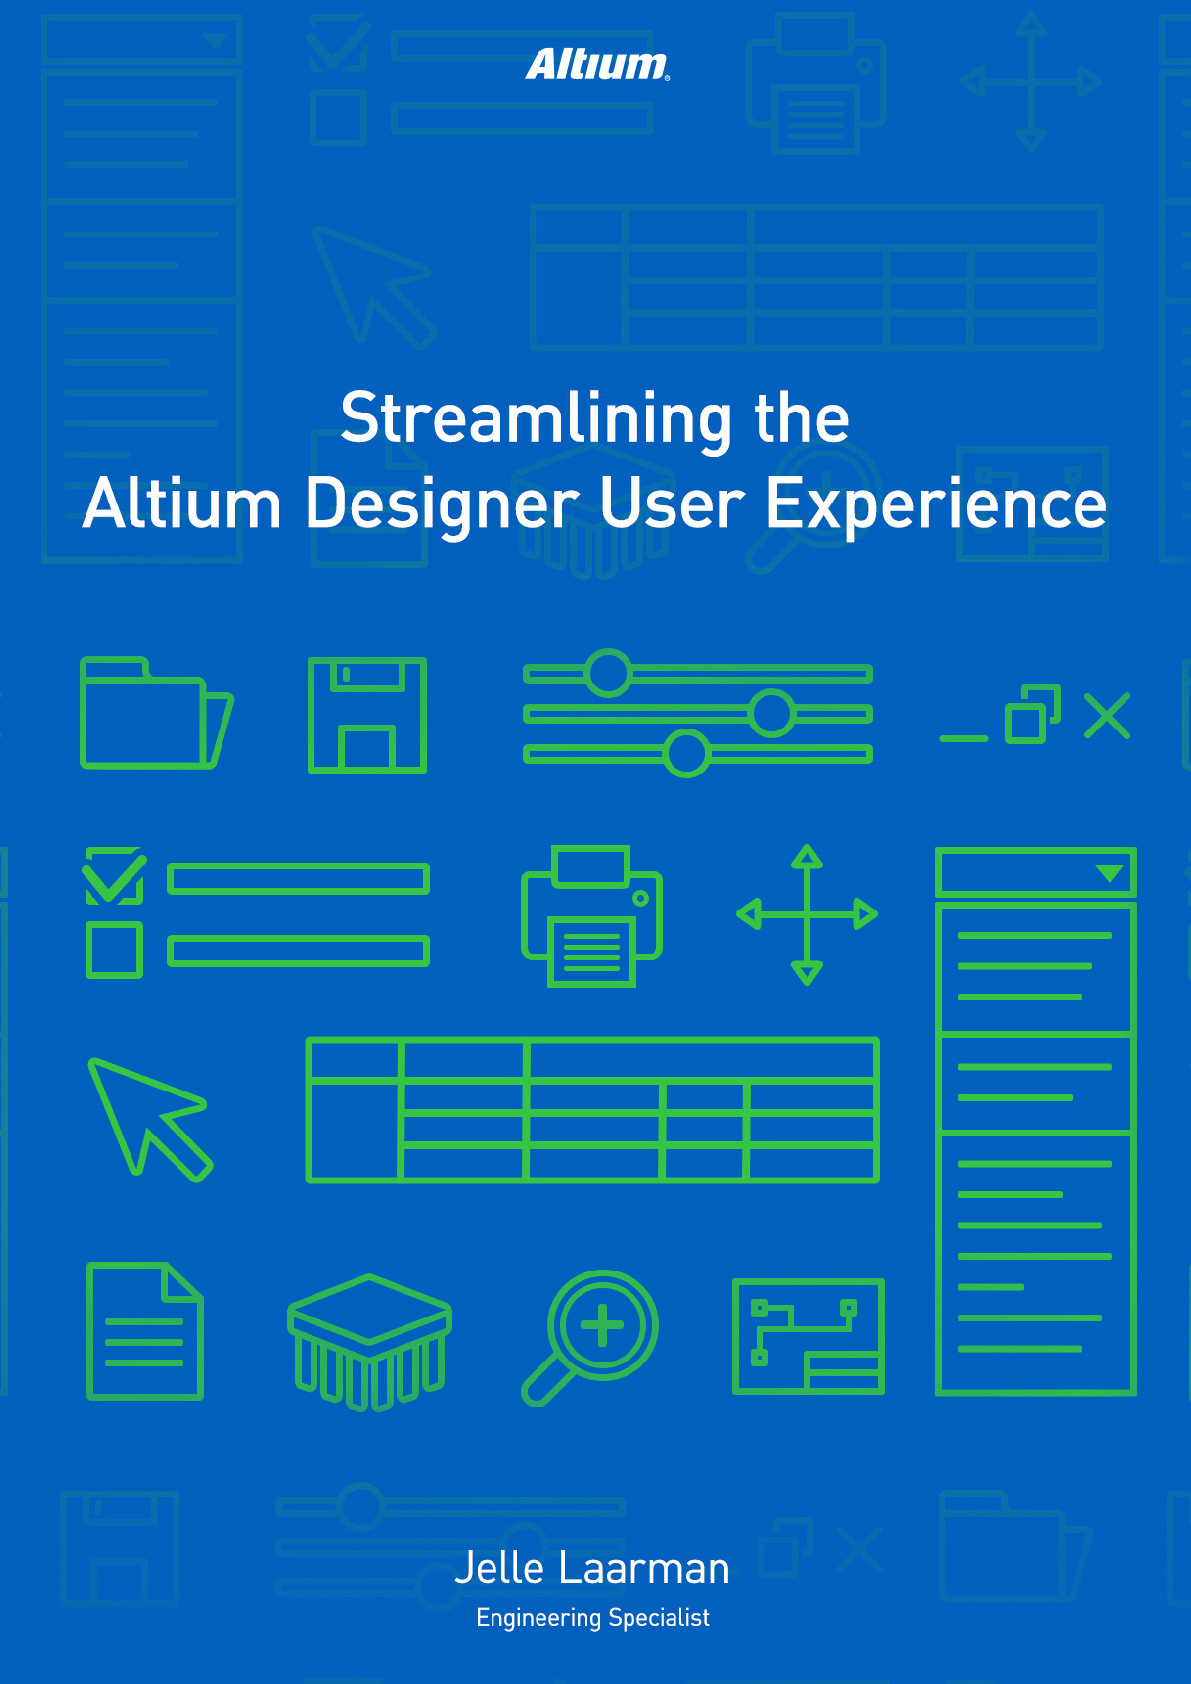 learn how to use altium designer